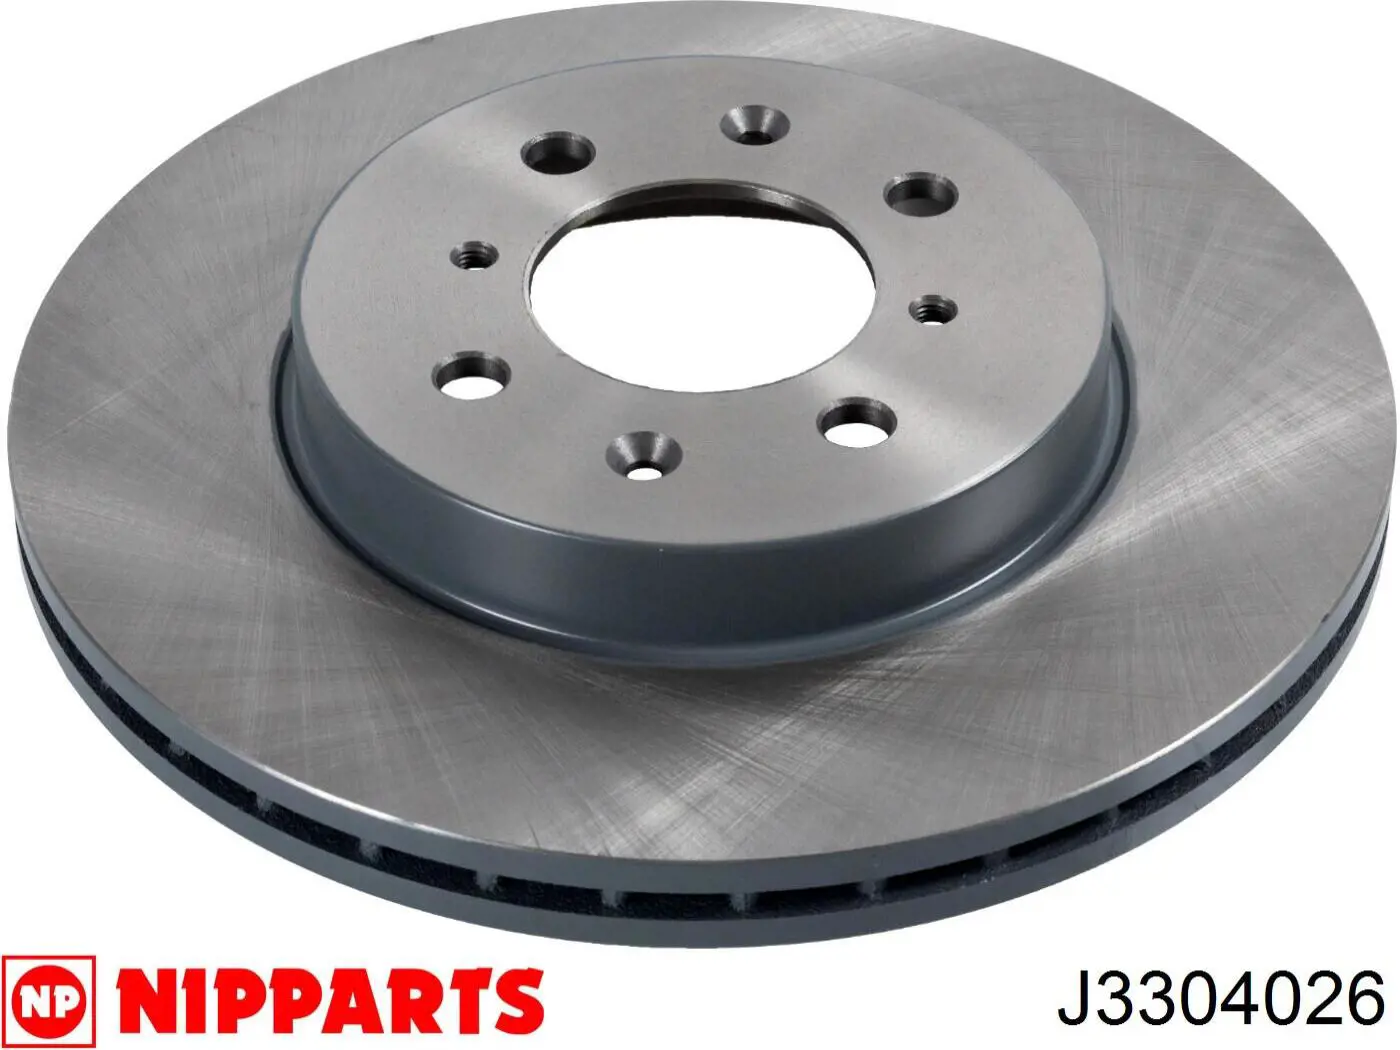 J3304026 Nipparts disco de freno delantero